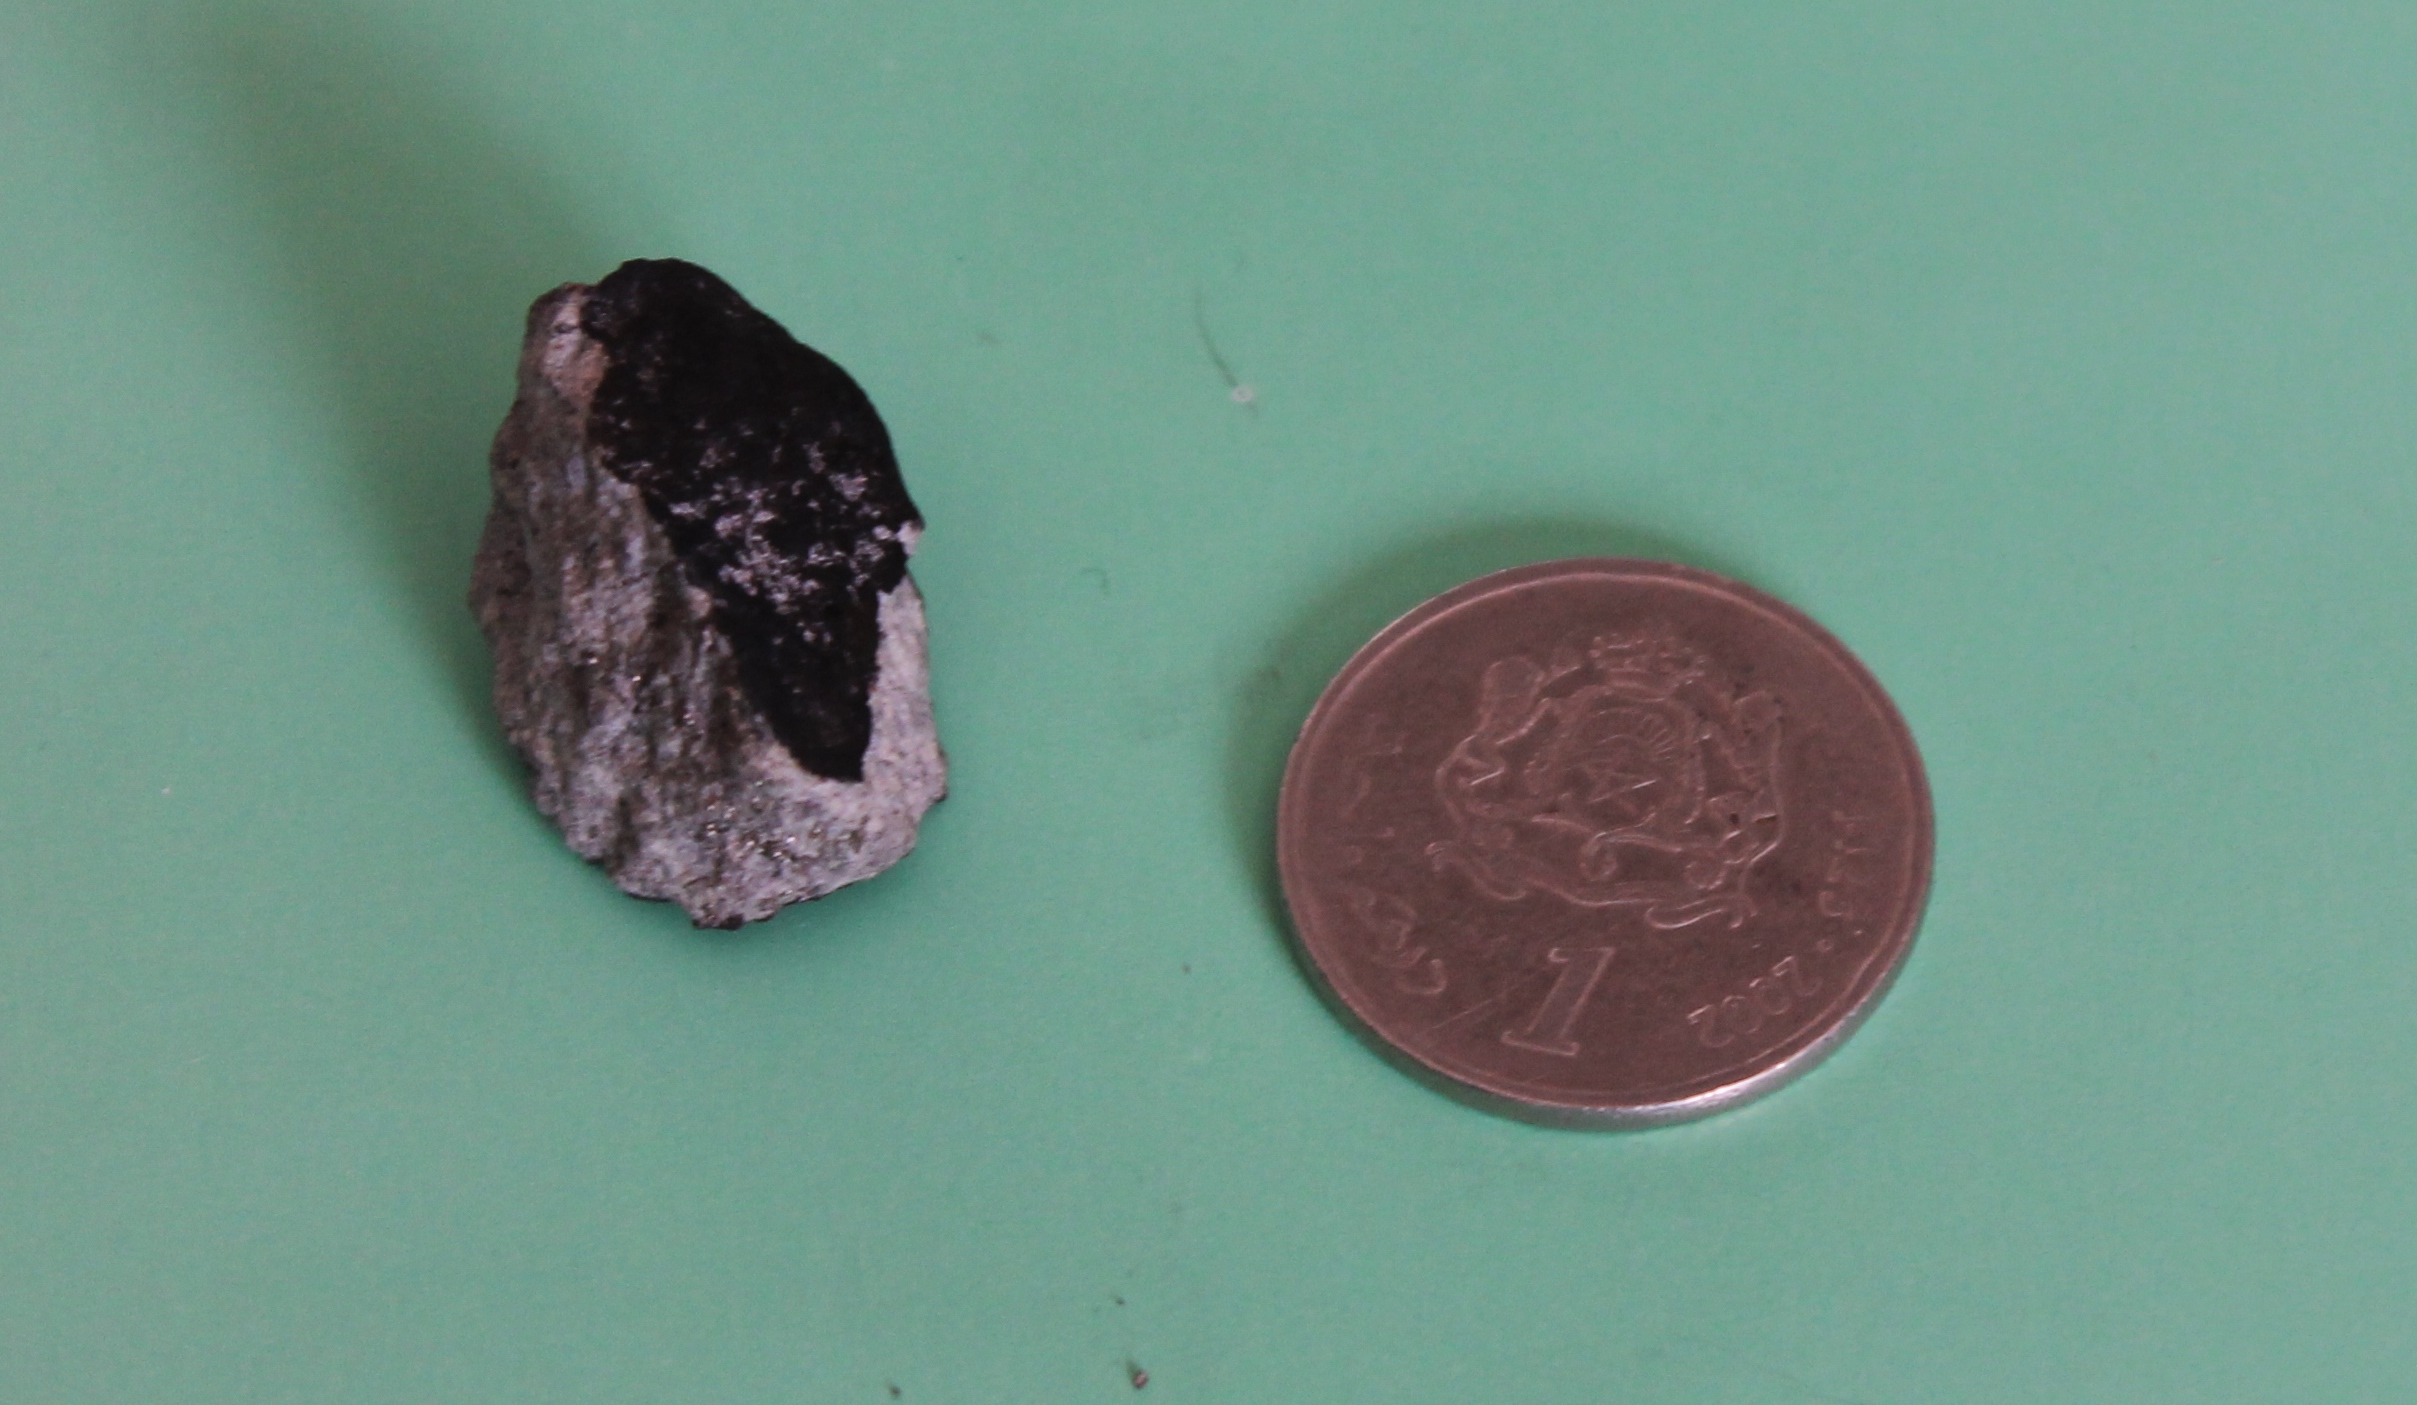 Igdi meteorite fragment showing an intact black fusion crust.